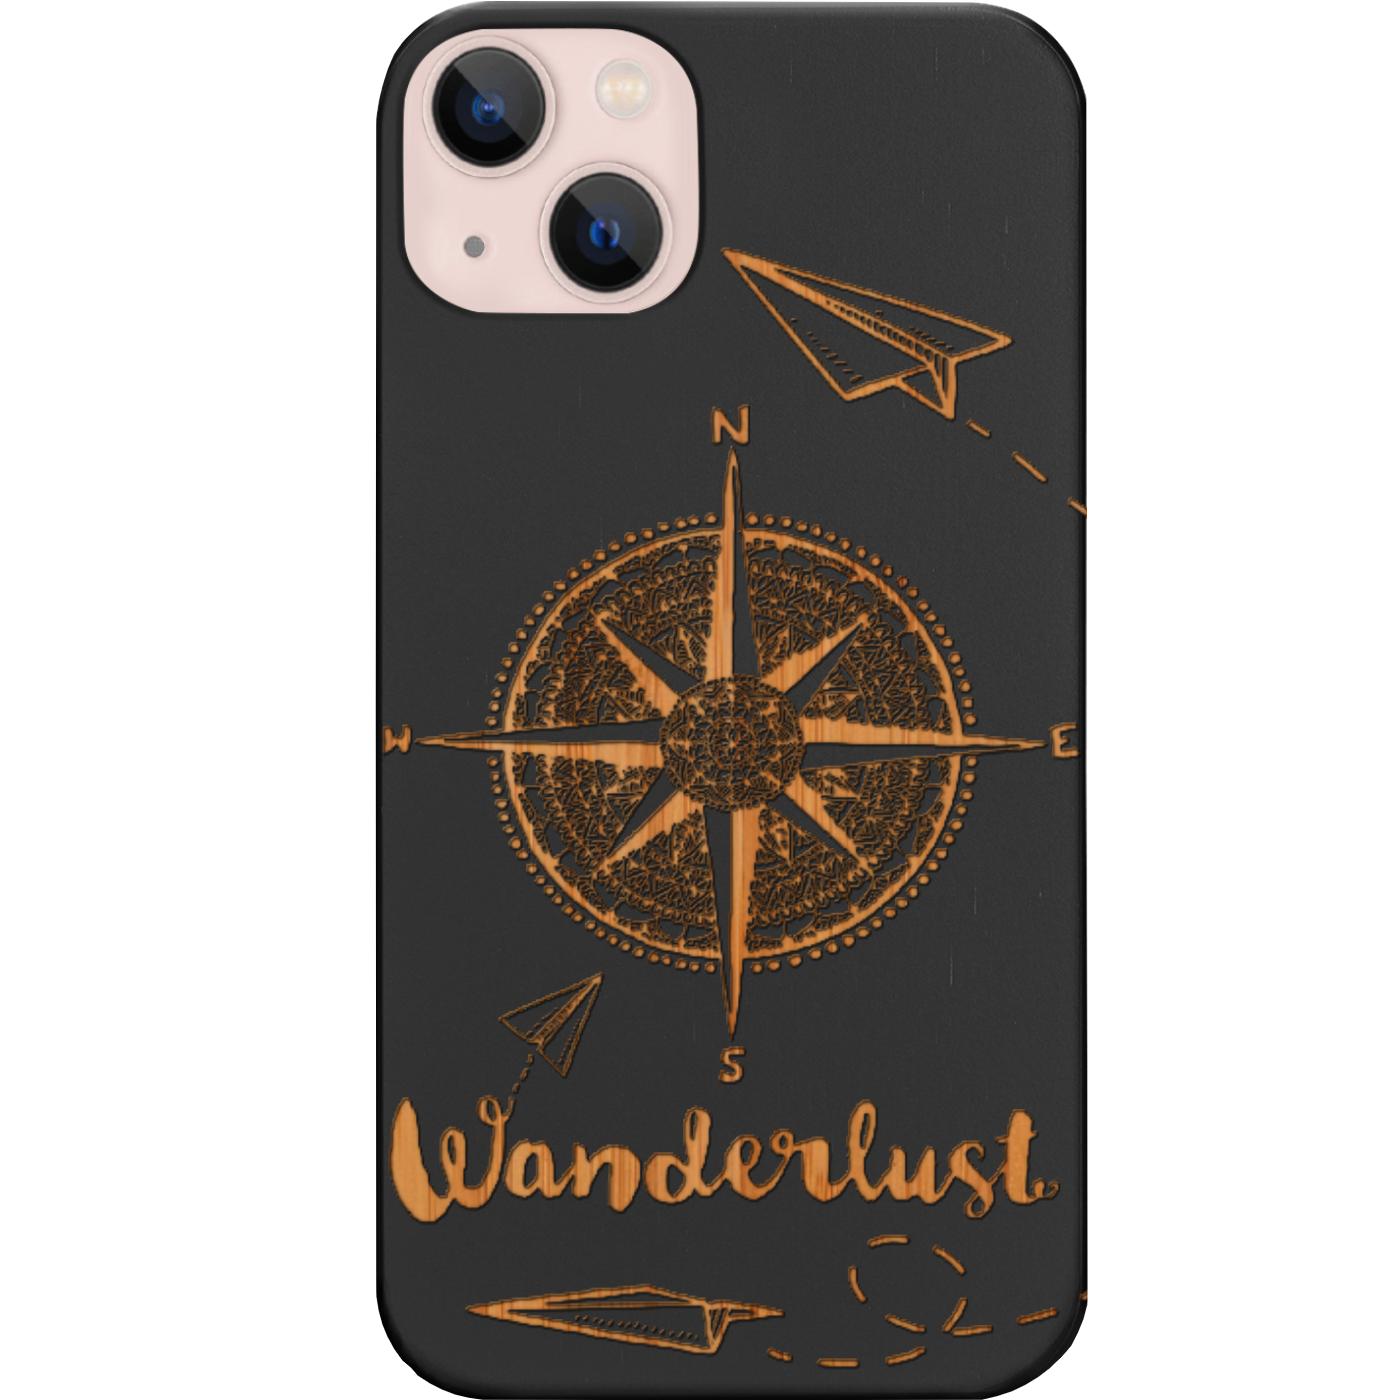 Wanderlust - Engraved Phone Case